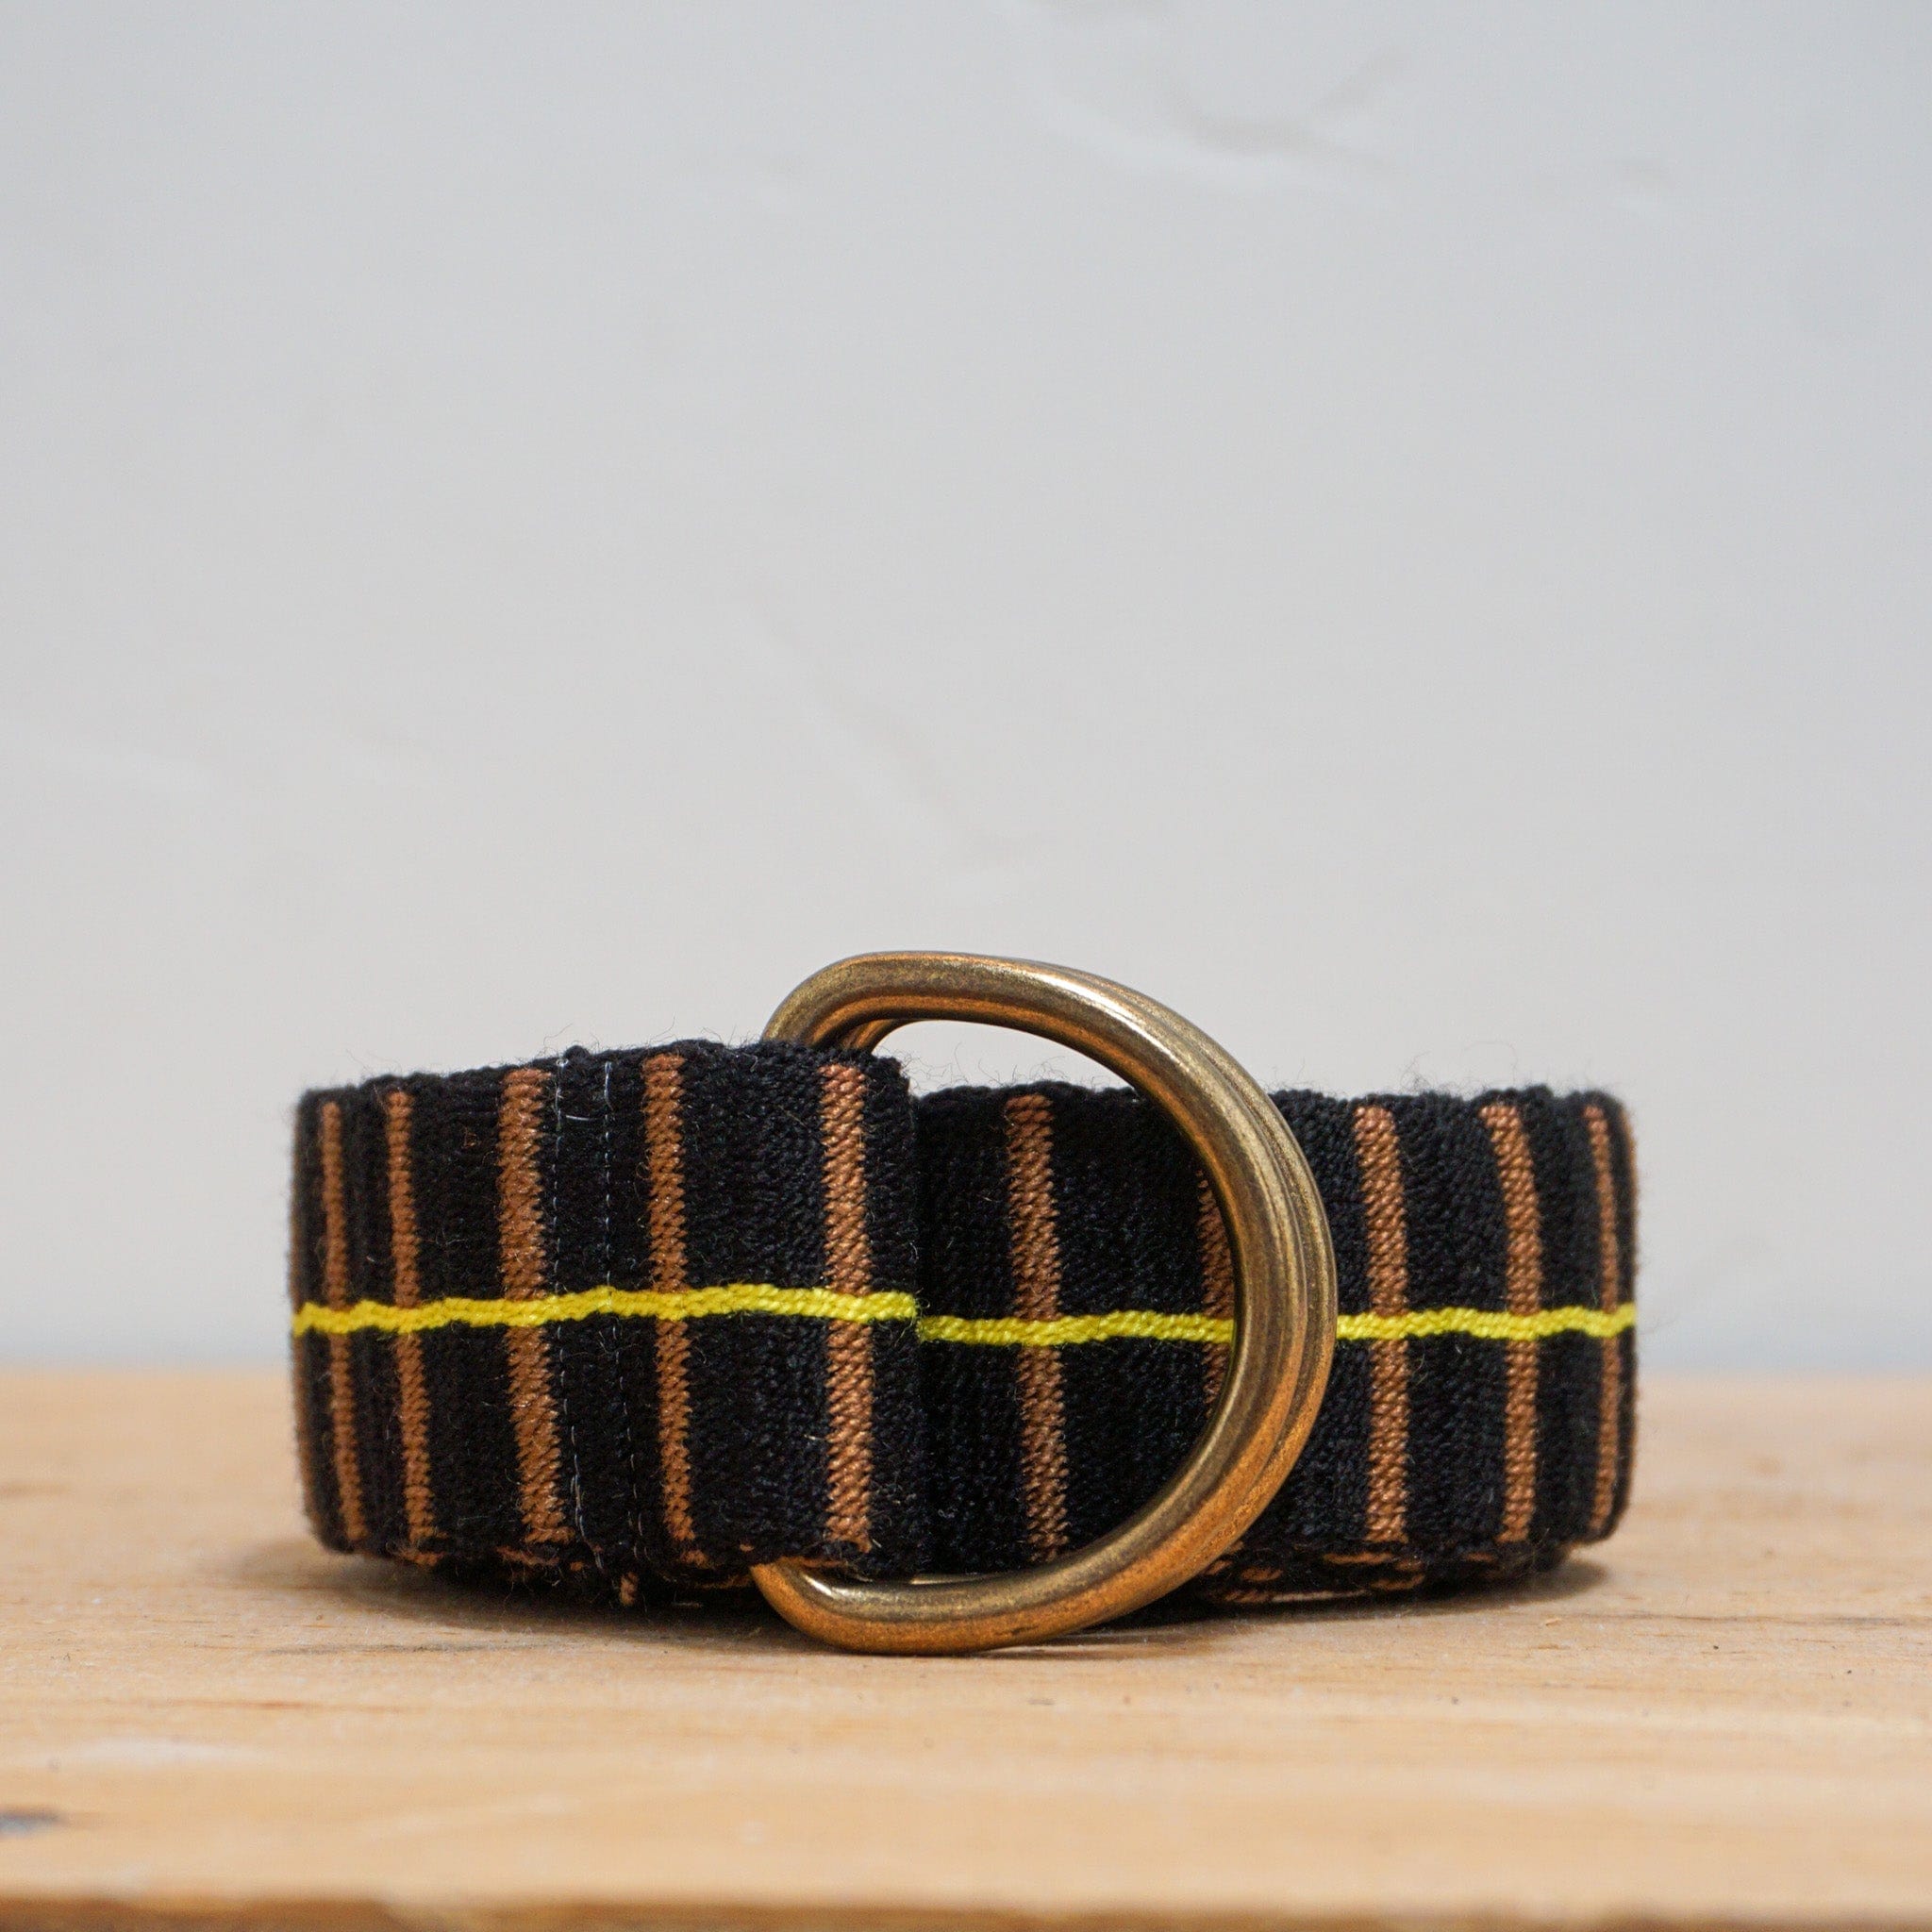 Guanabana Apparel & Accessories Brown/Black/Yellow Braided Belt by Guanabana